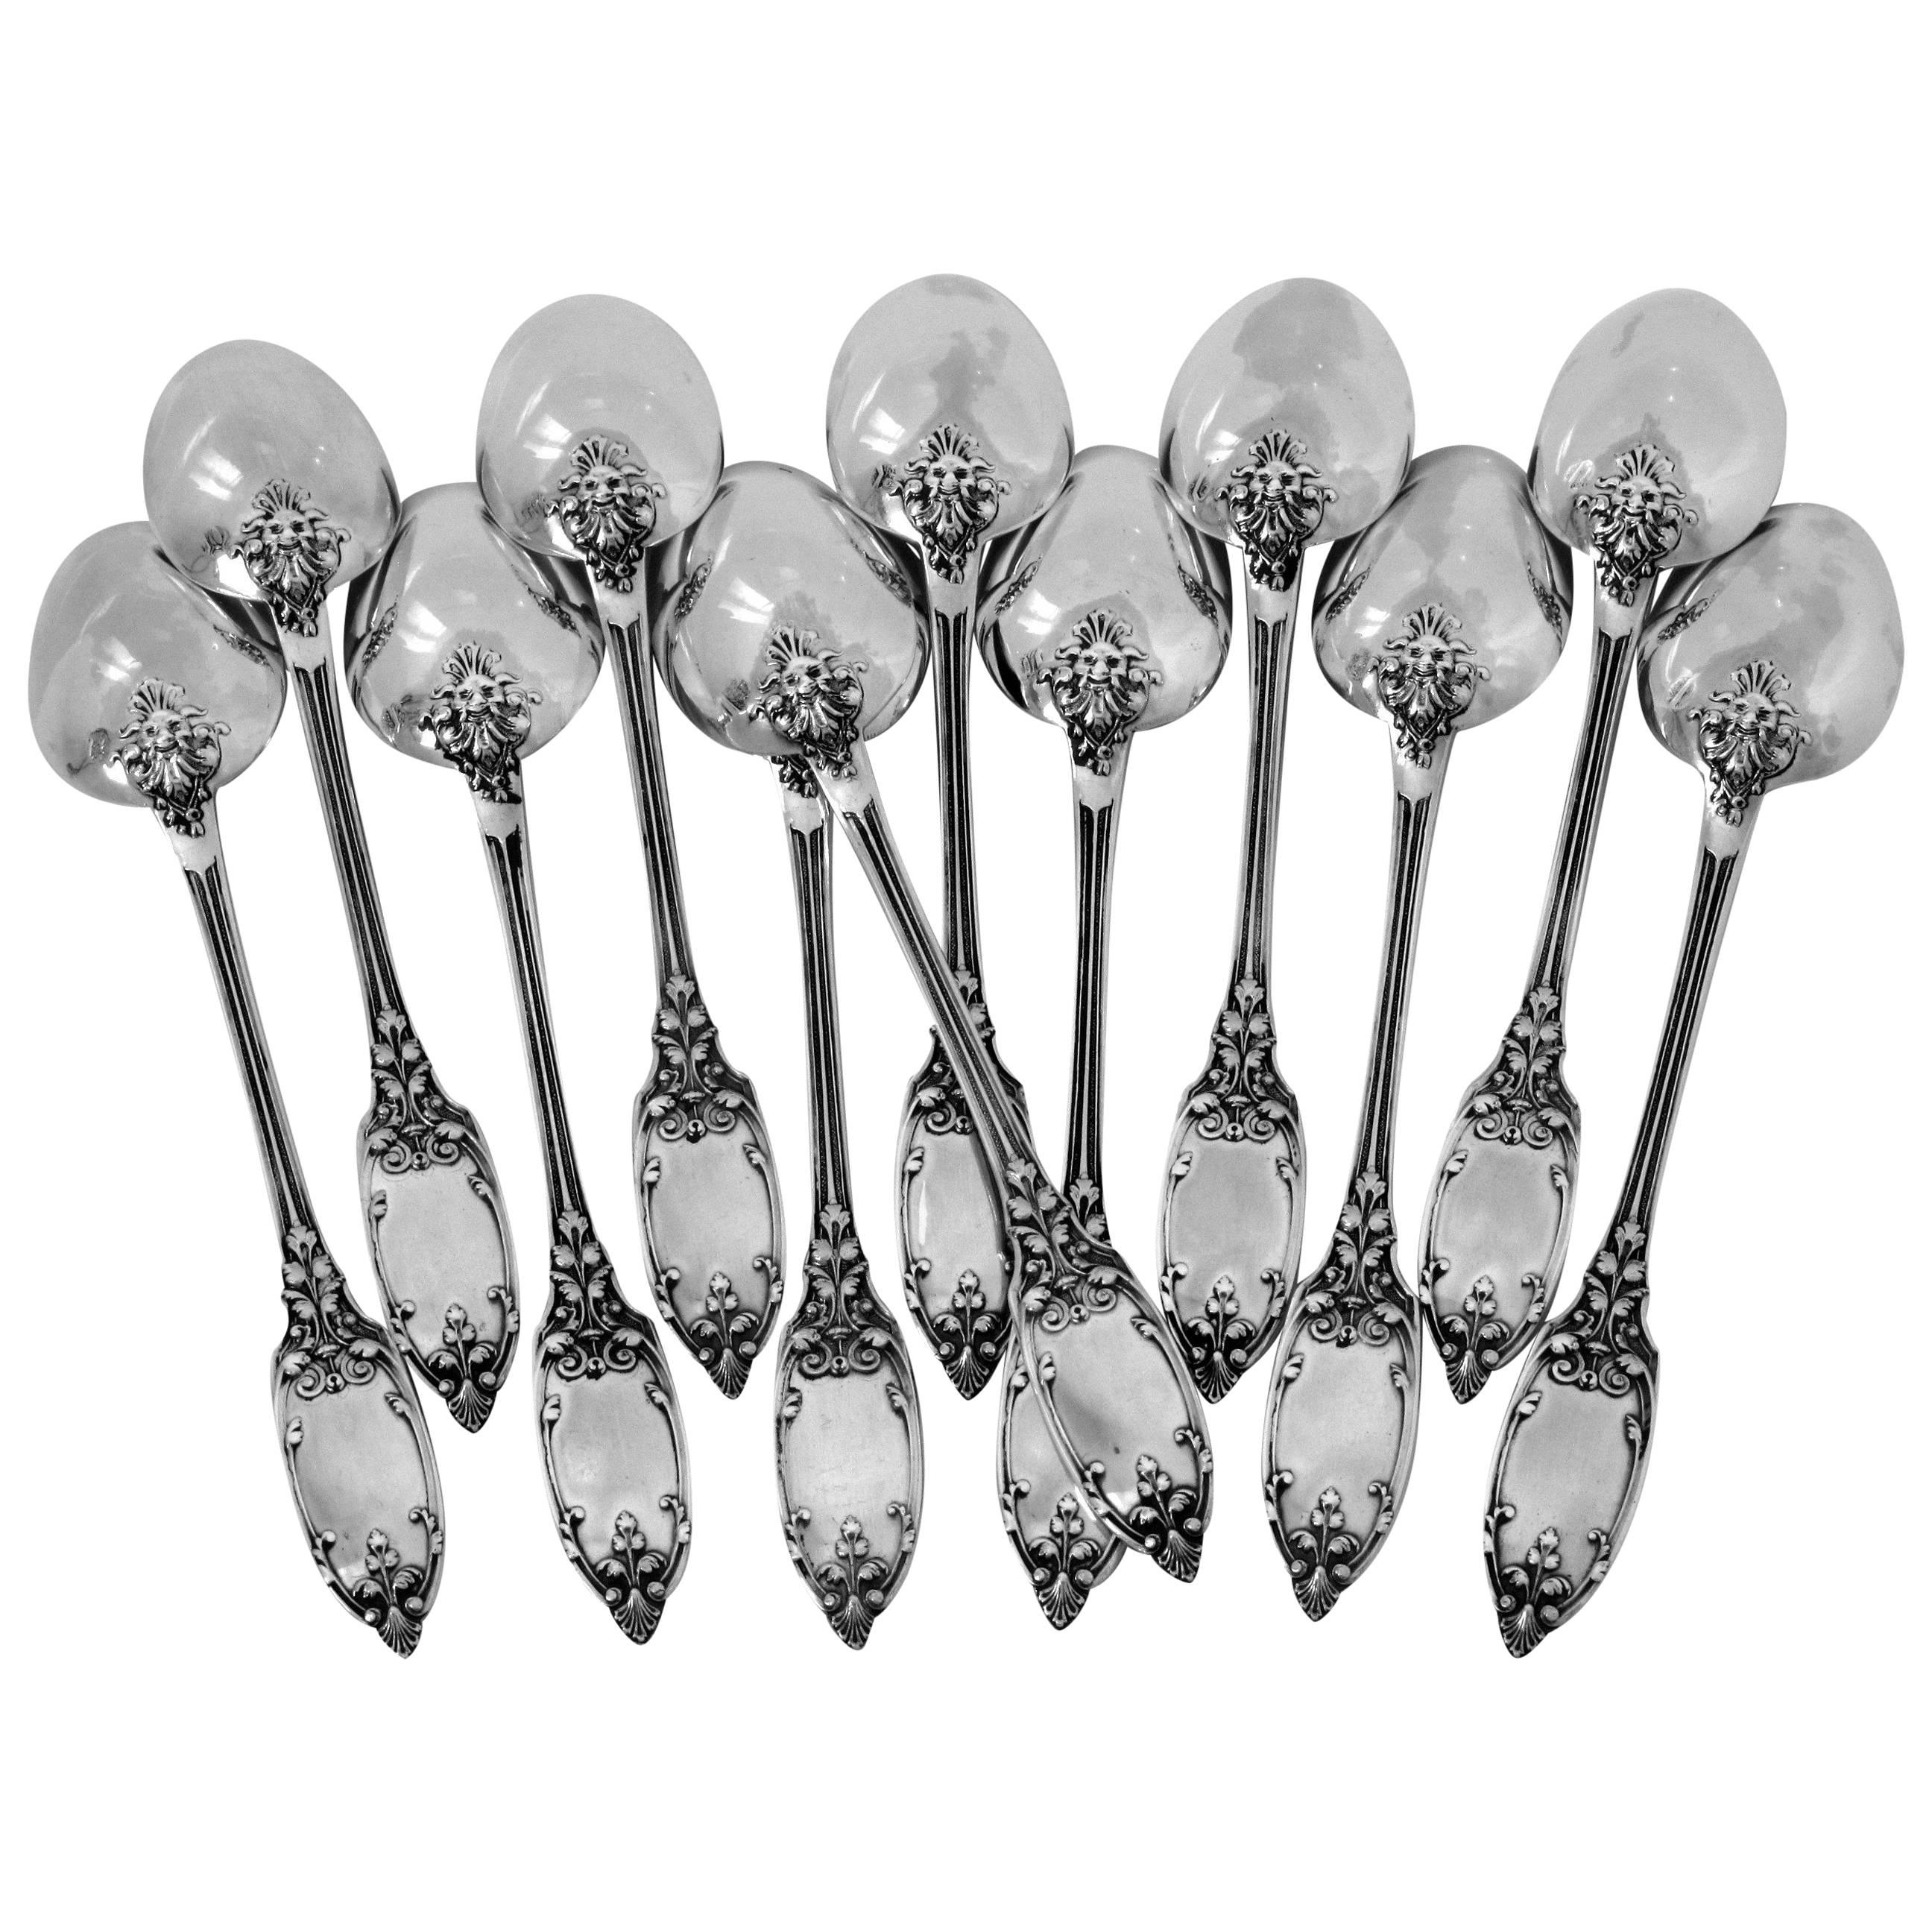 Puiforcat French Sterling Silver Tea Spoons Set 12 pc original box Mascaron